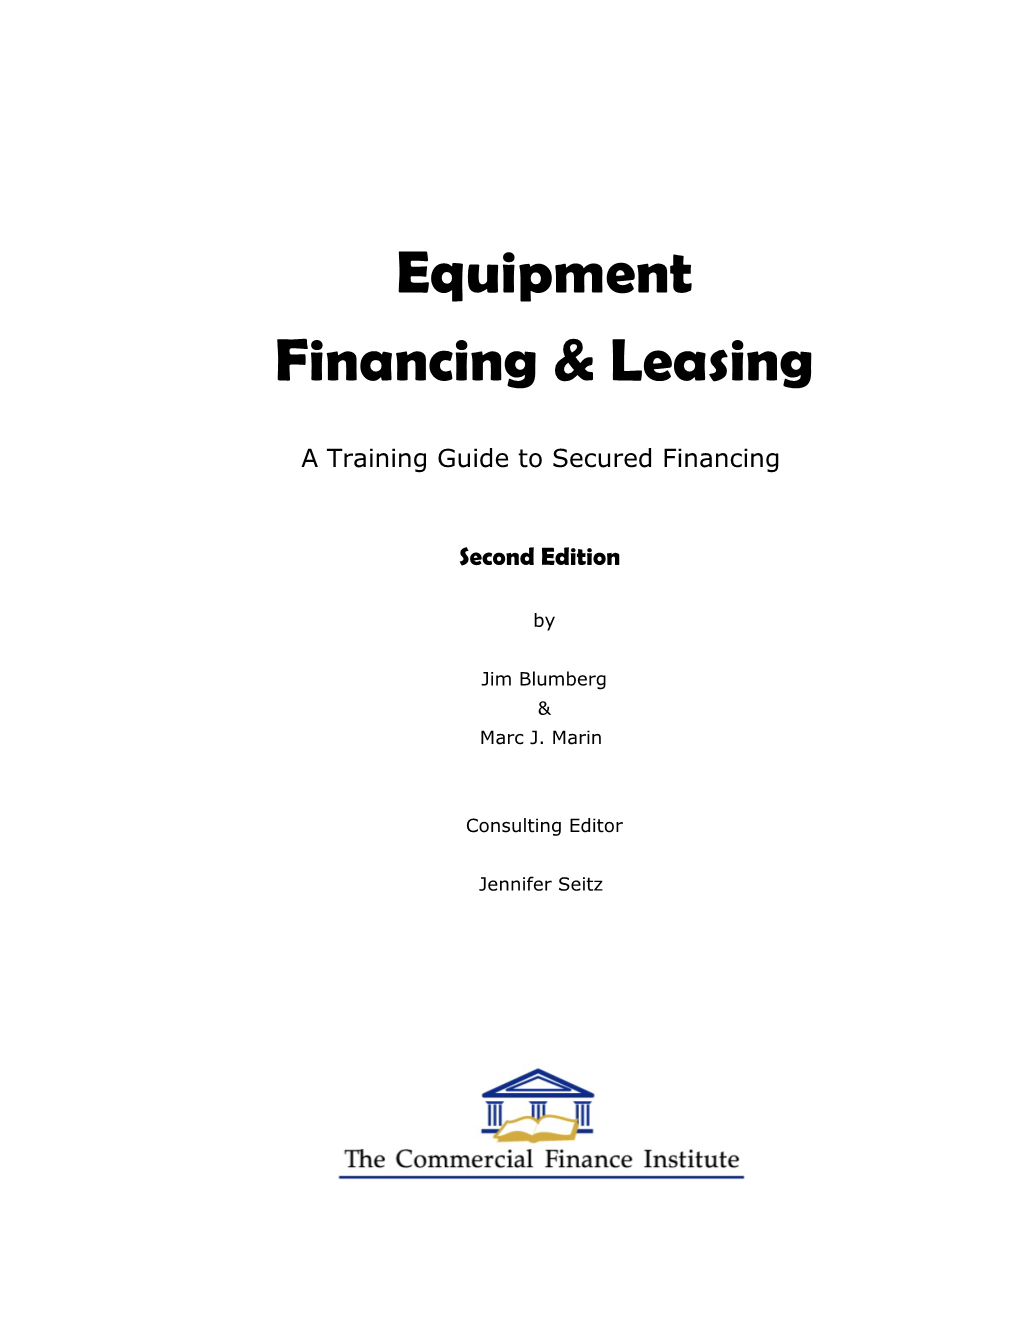 Equipment Financing & Leasing